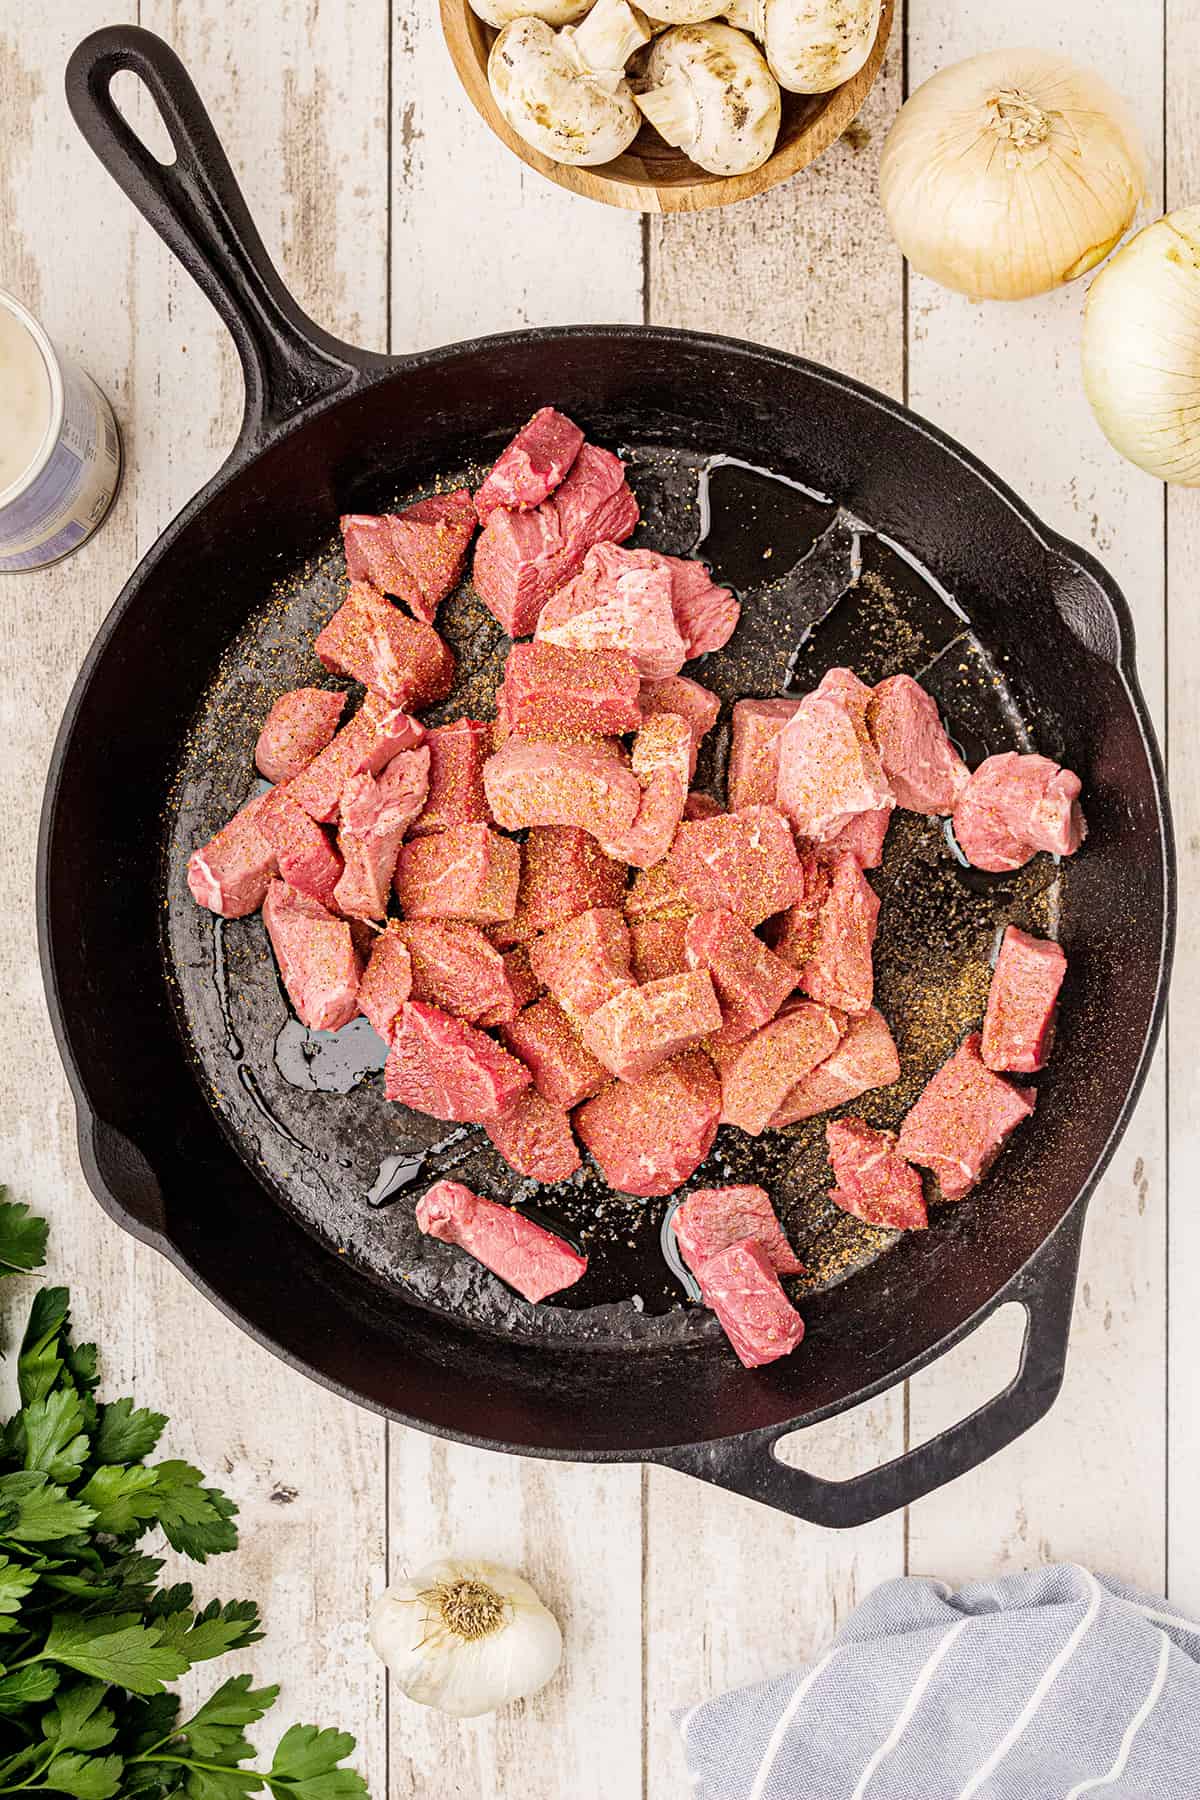 Steak tips sprinkled with seasoned salt in a cast iron pan.